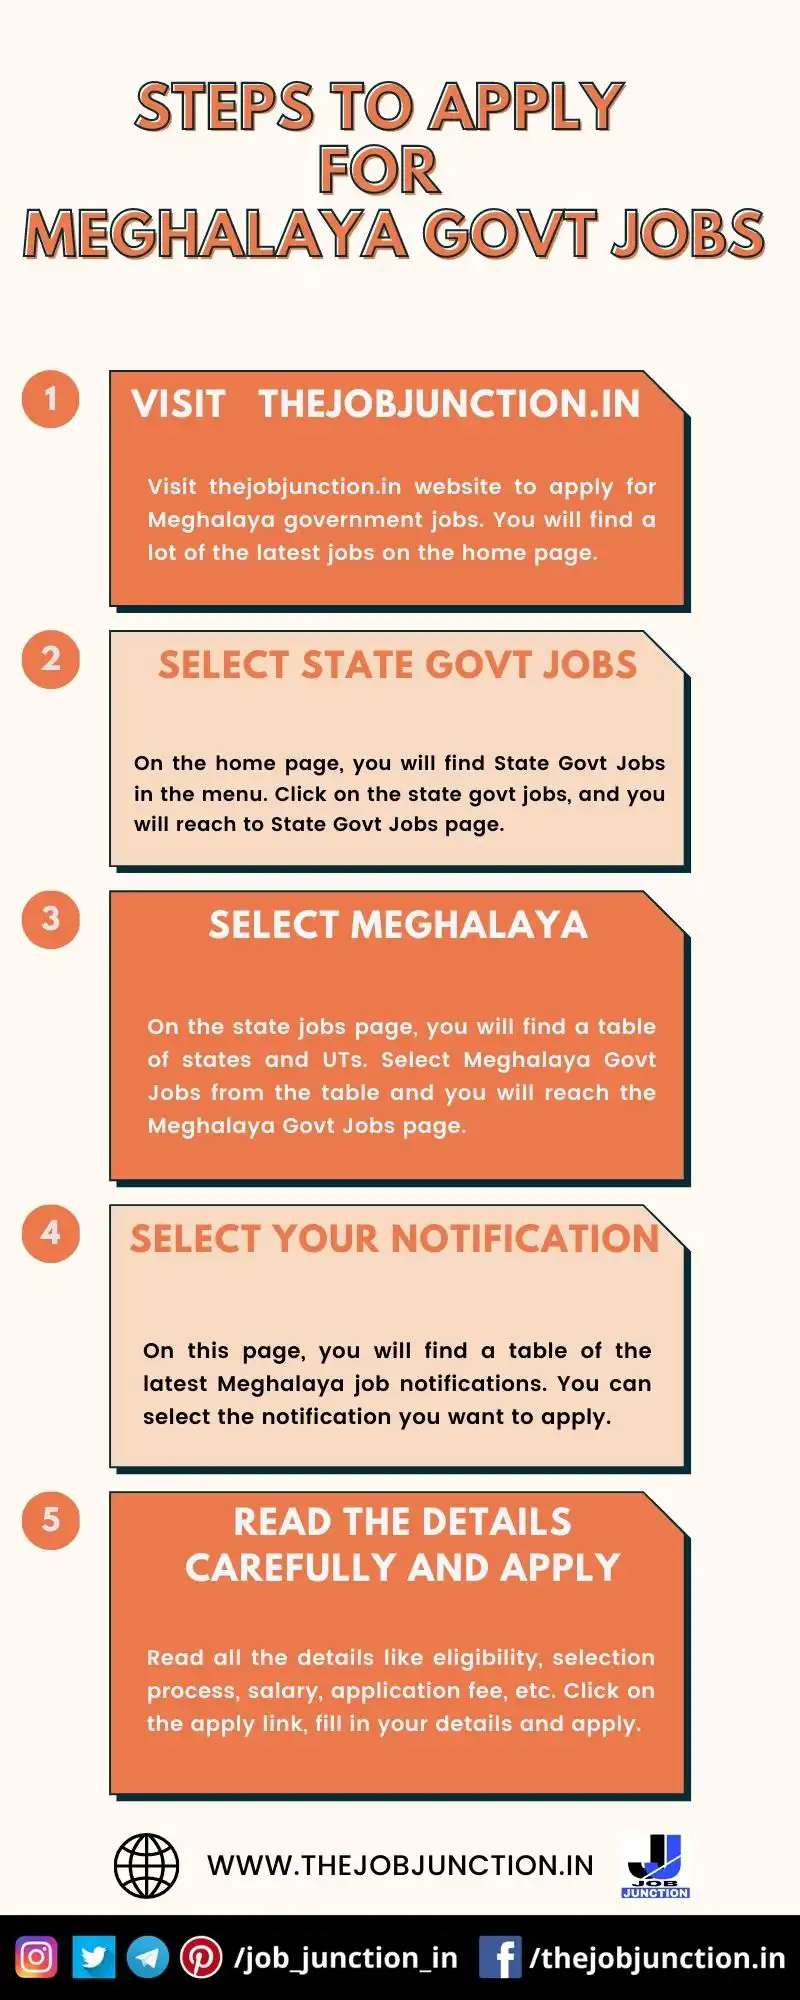 STEPS TO APPLY FOR MEGHALAYA GOVT JOBS